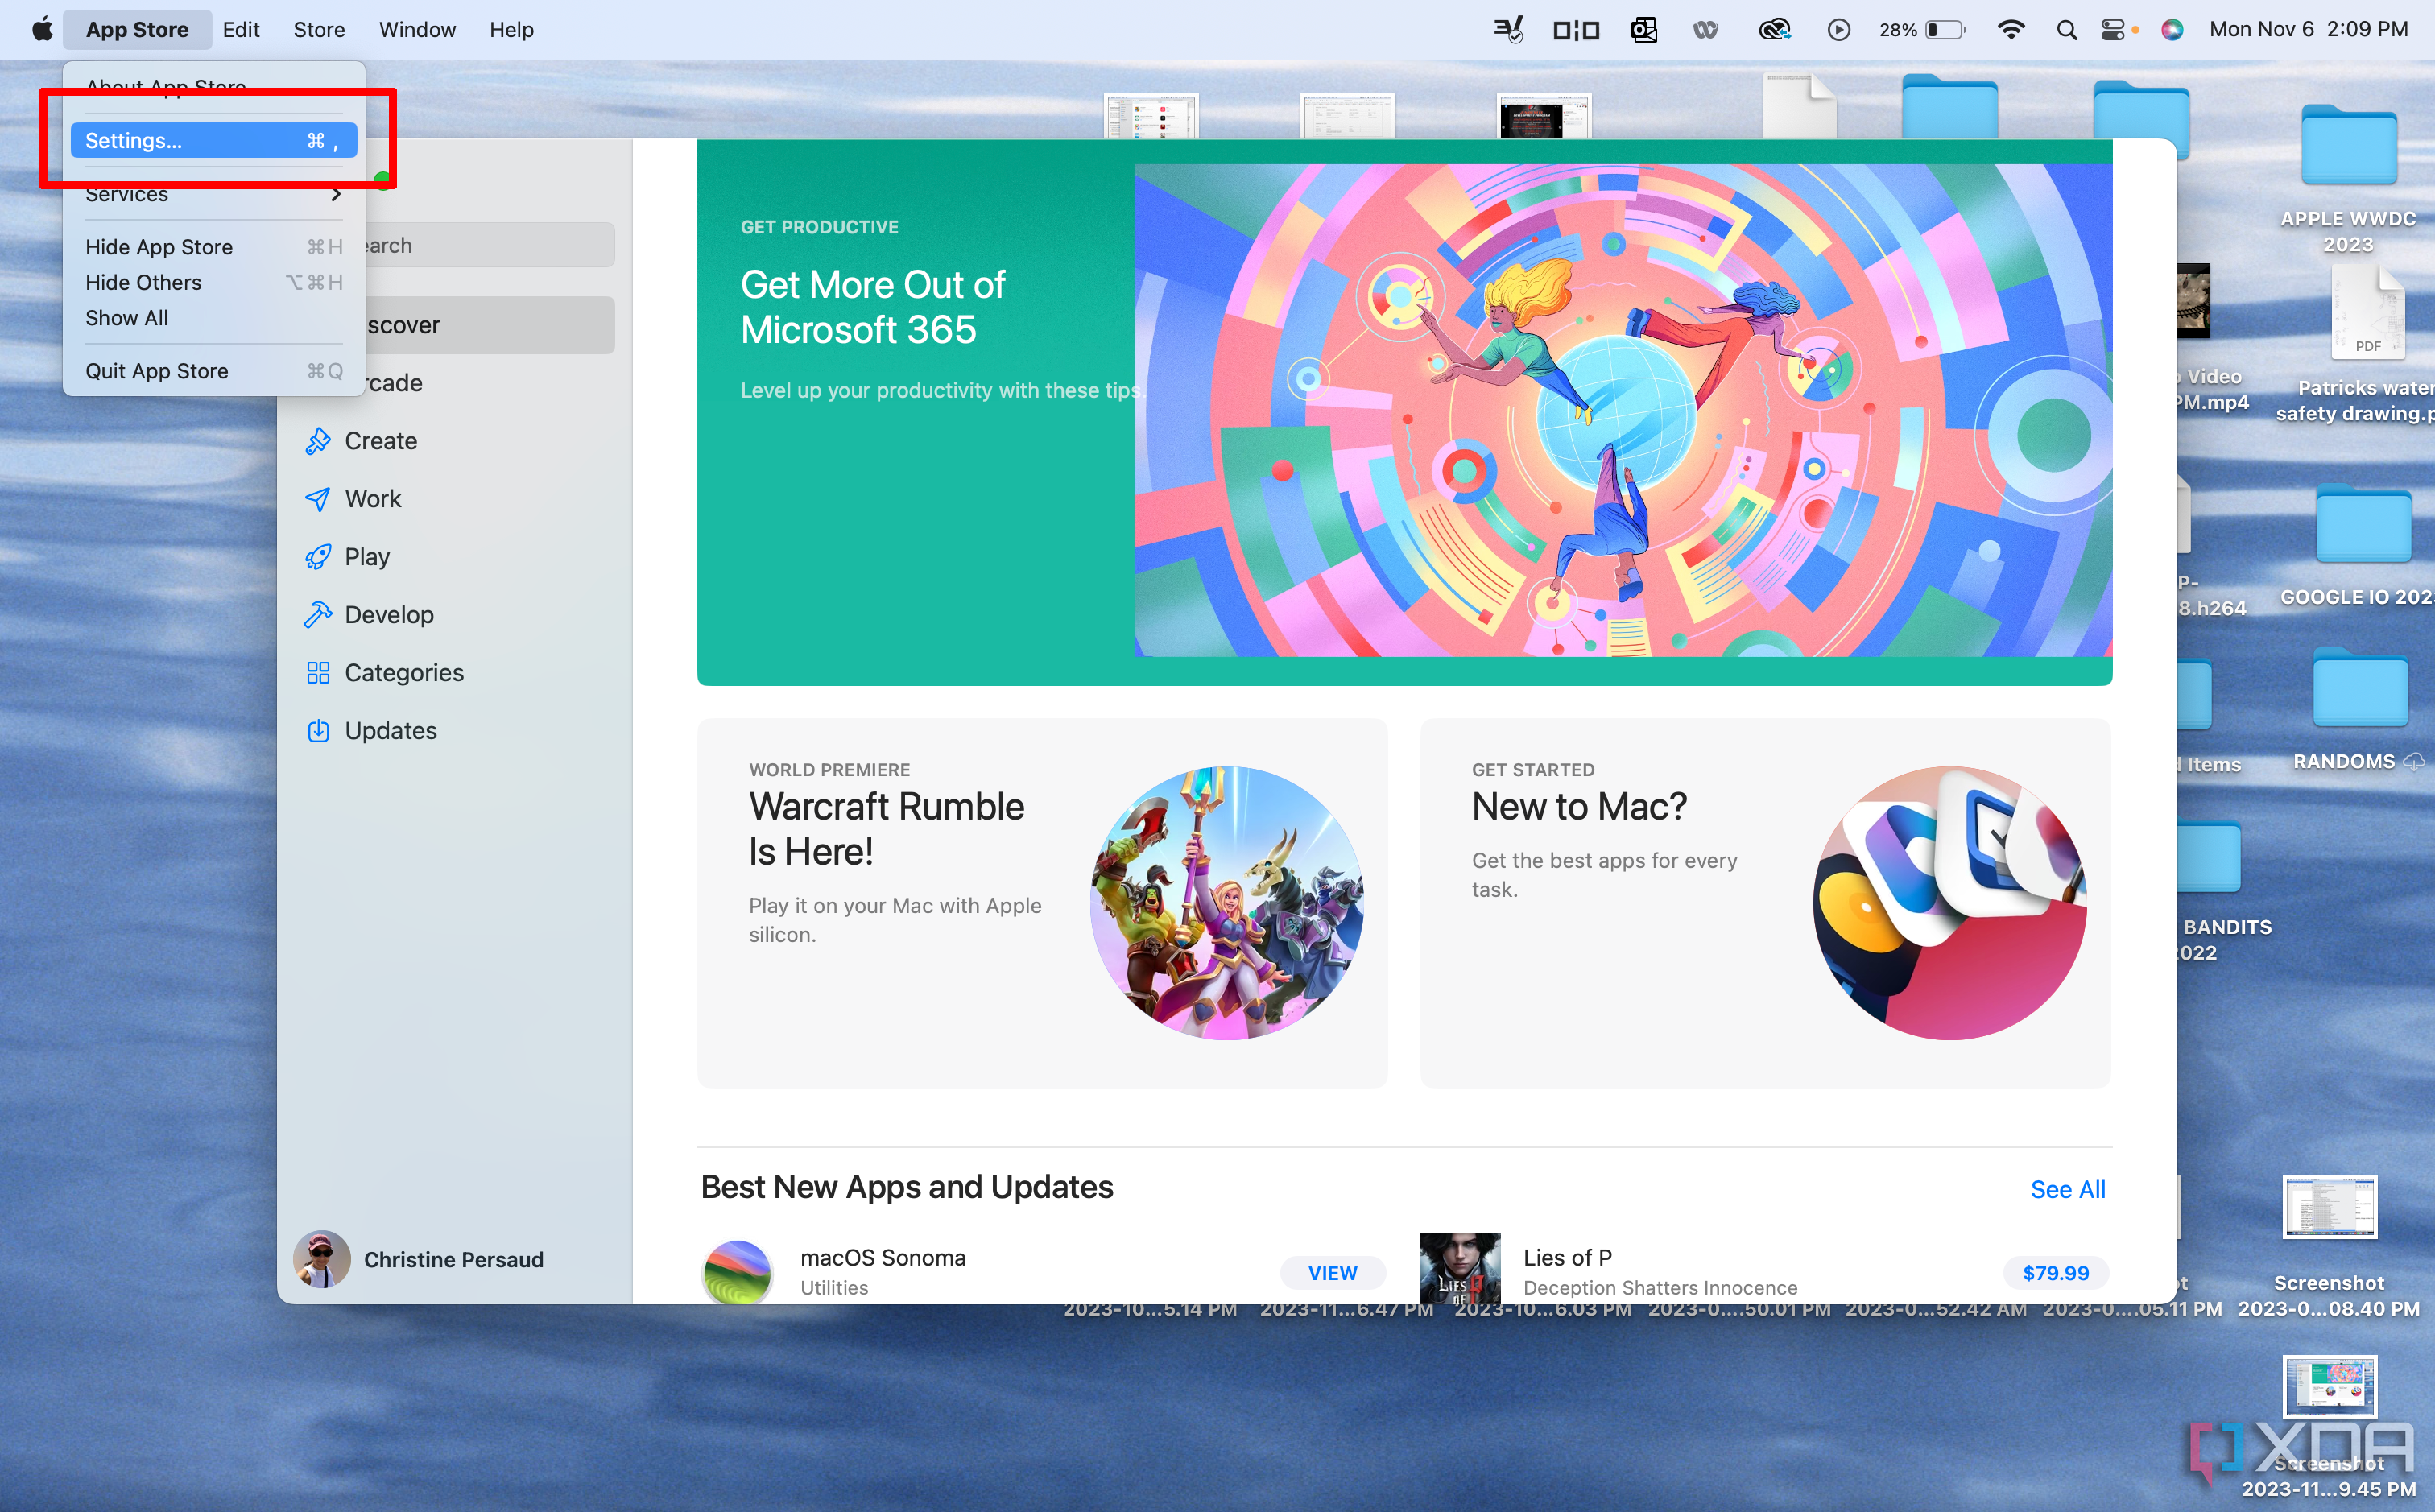 App Store menu on Mac with Settings selected.